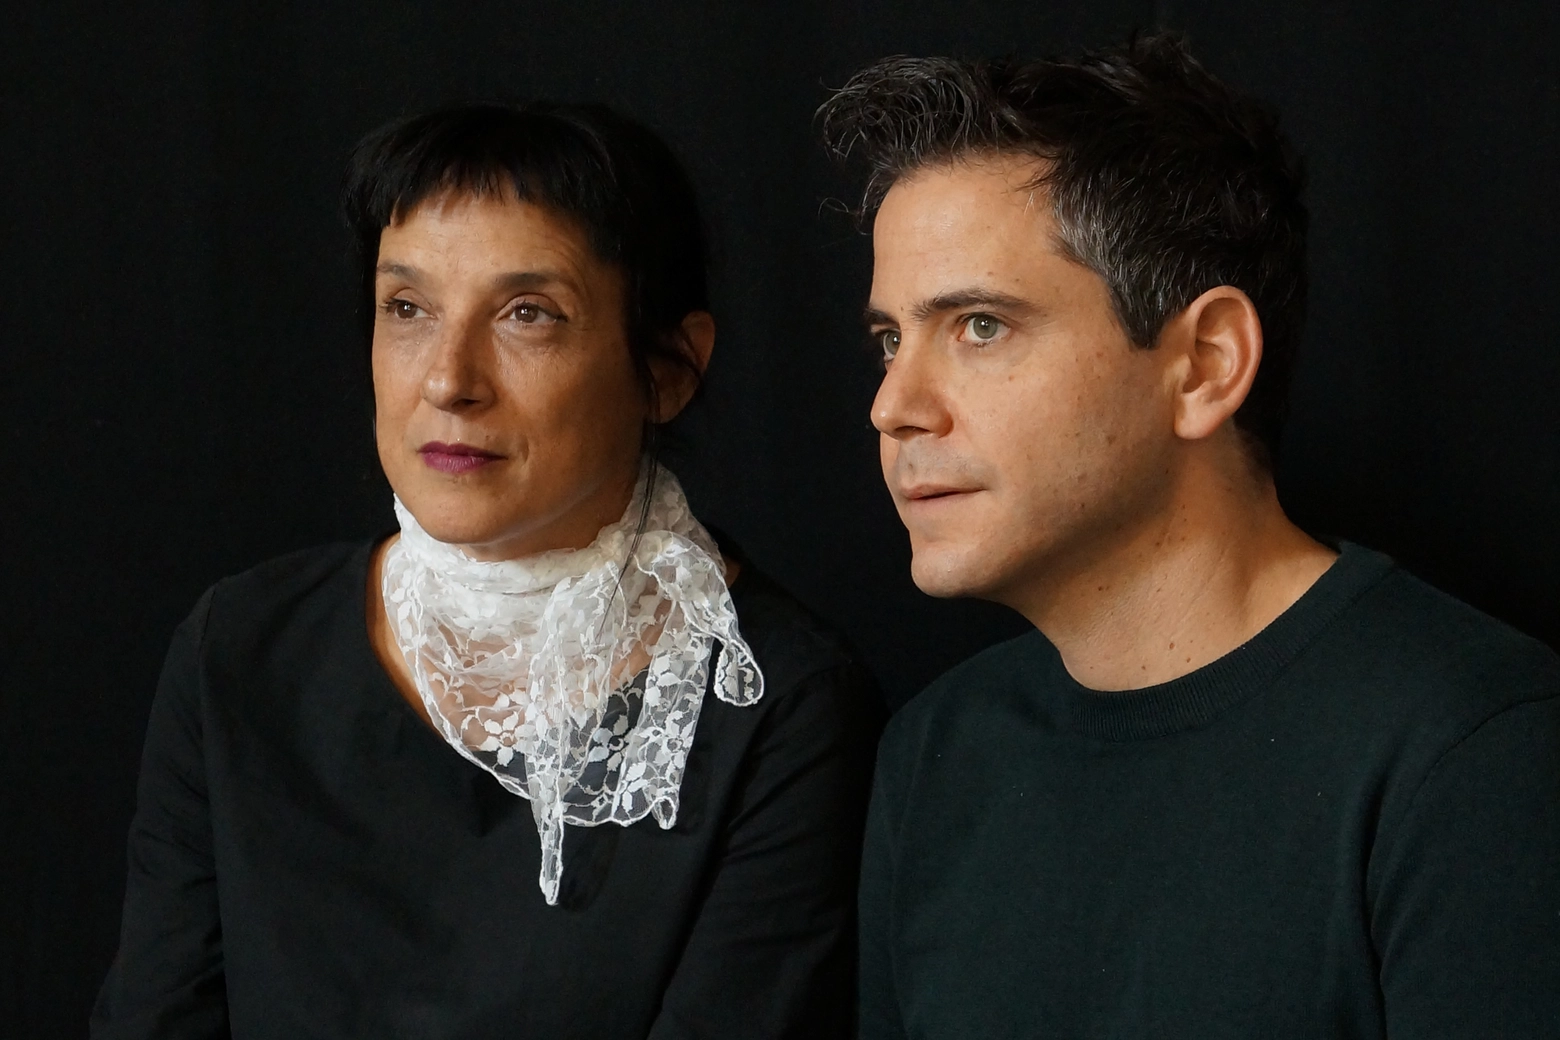 Fiorenza Menni e Andrea Mochi Sismondi (ph. Margherita Caprilli)